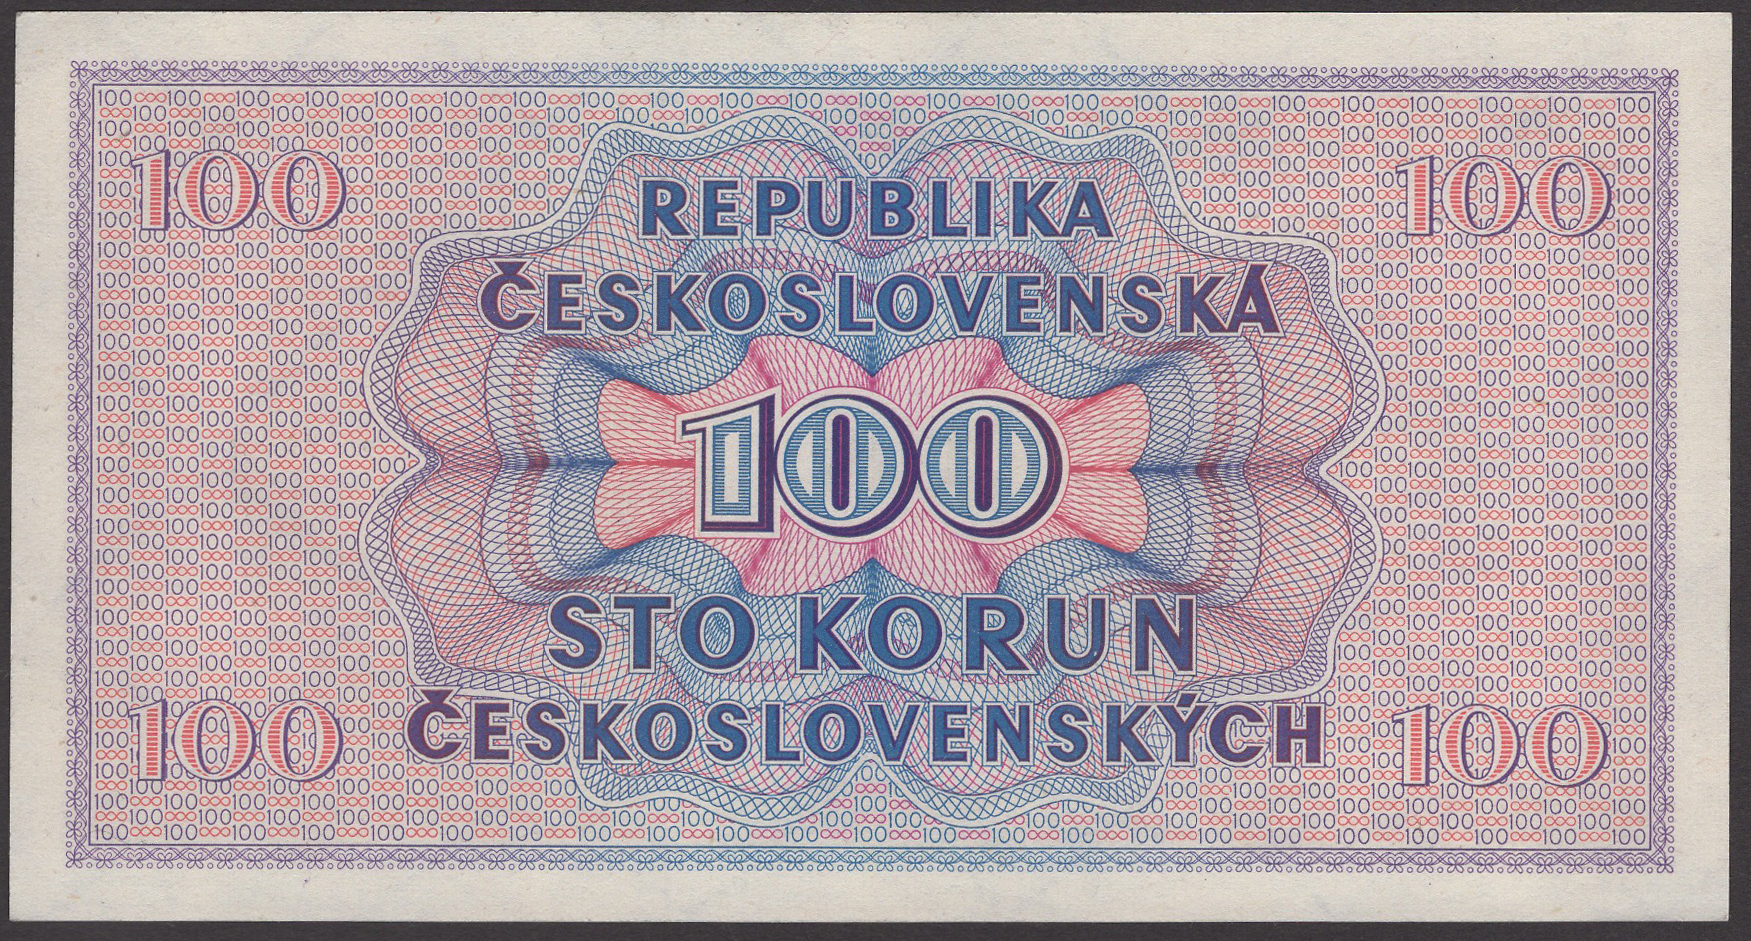 Republika Ceskoslovenska, 50 Korun (2), 1948, serial numbers A48 080411-12, also 100 Korun... - Bild 4 aus 4